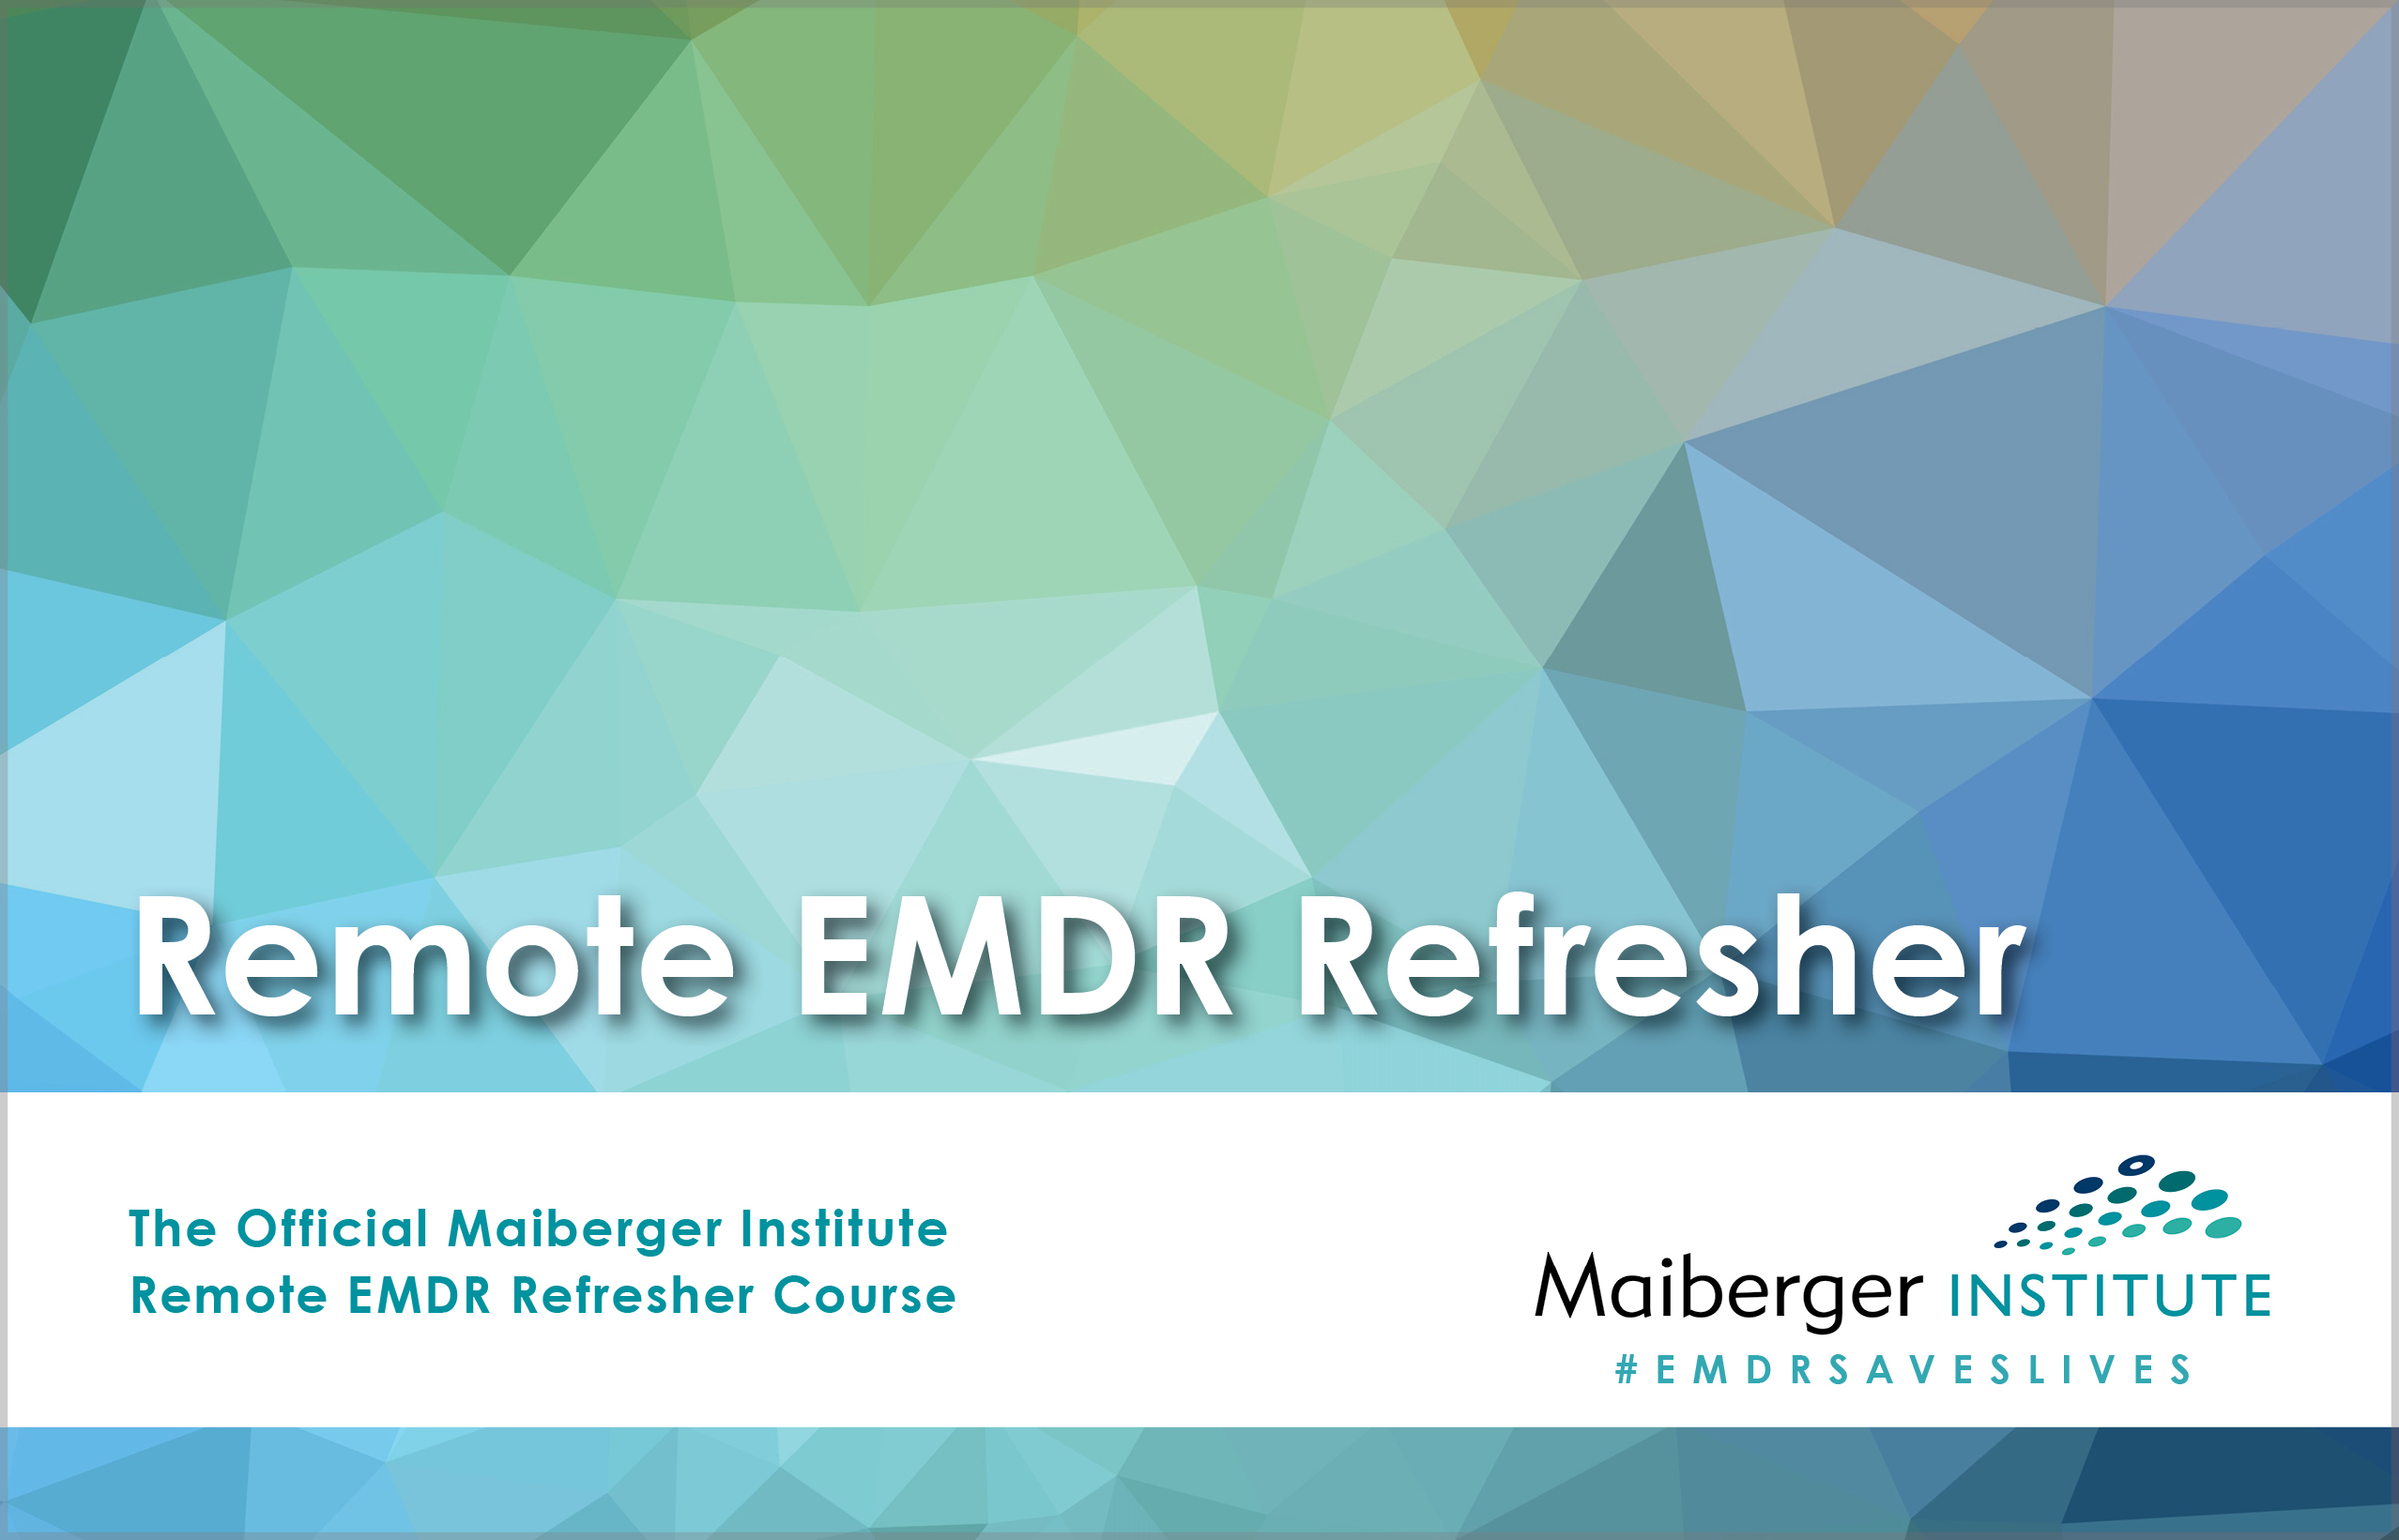 Remote EMDR Refresher Course - Maiberger Institute - EMDR SAVES LIVES